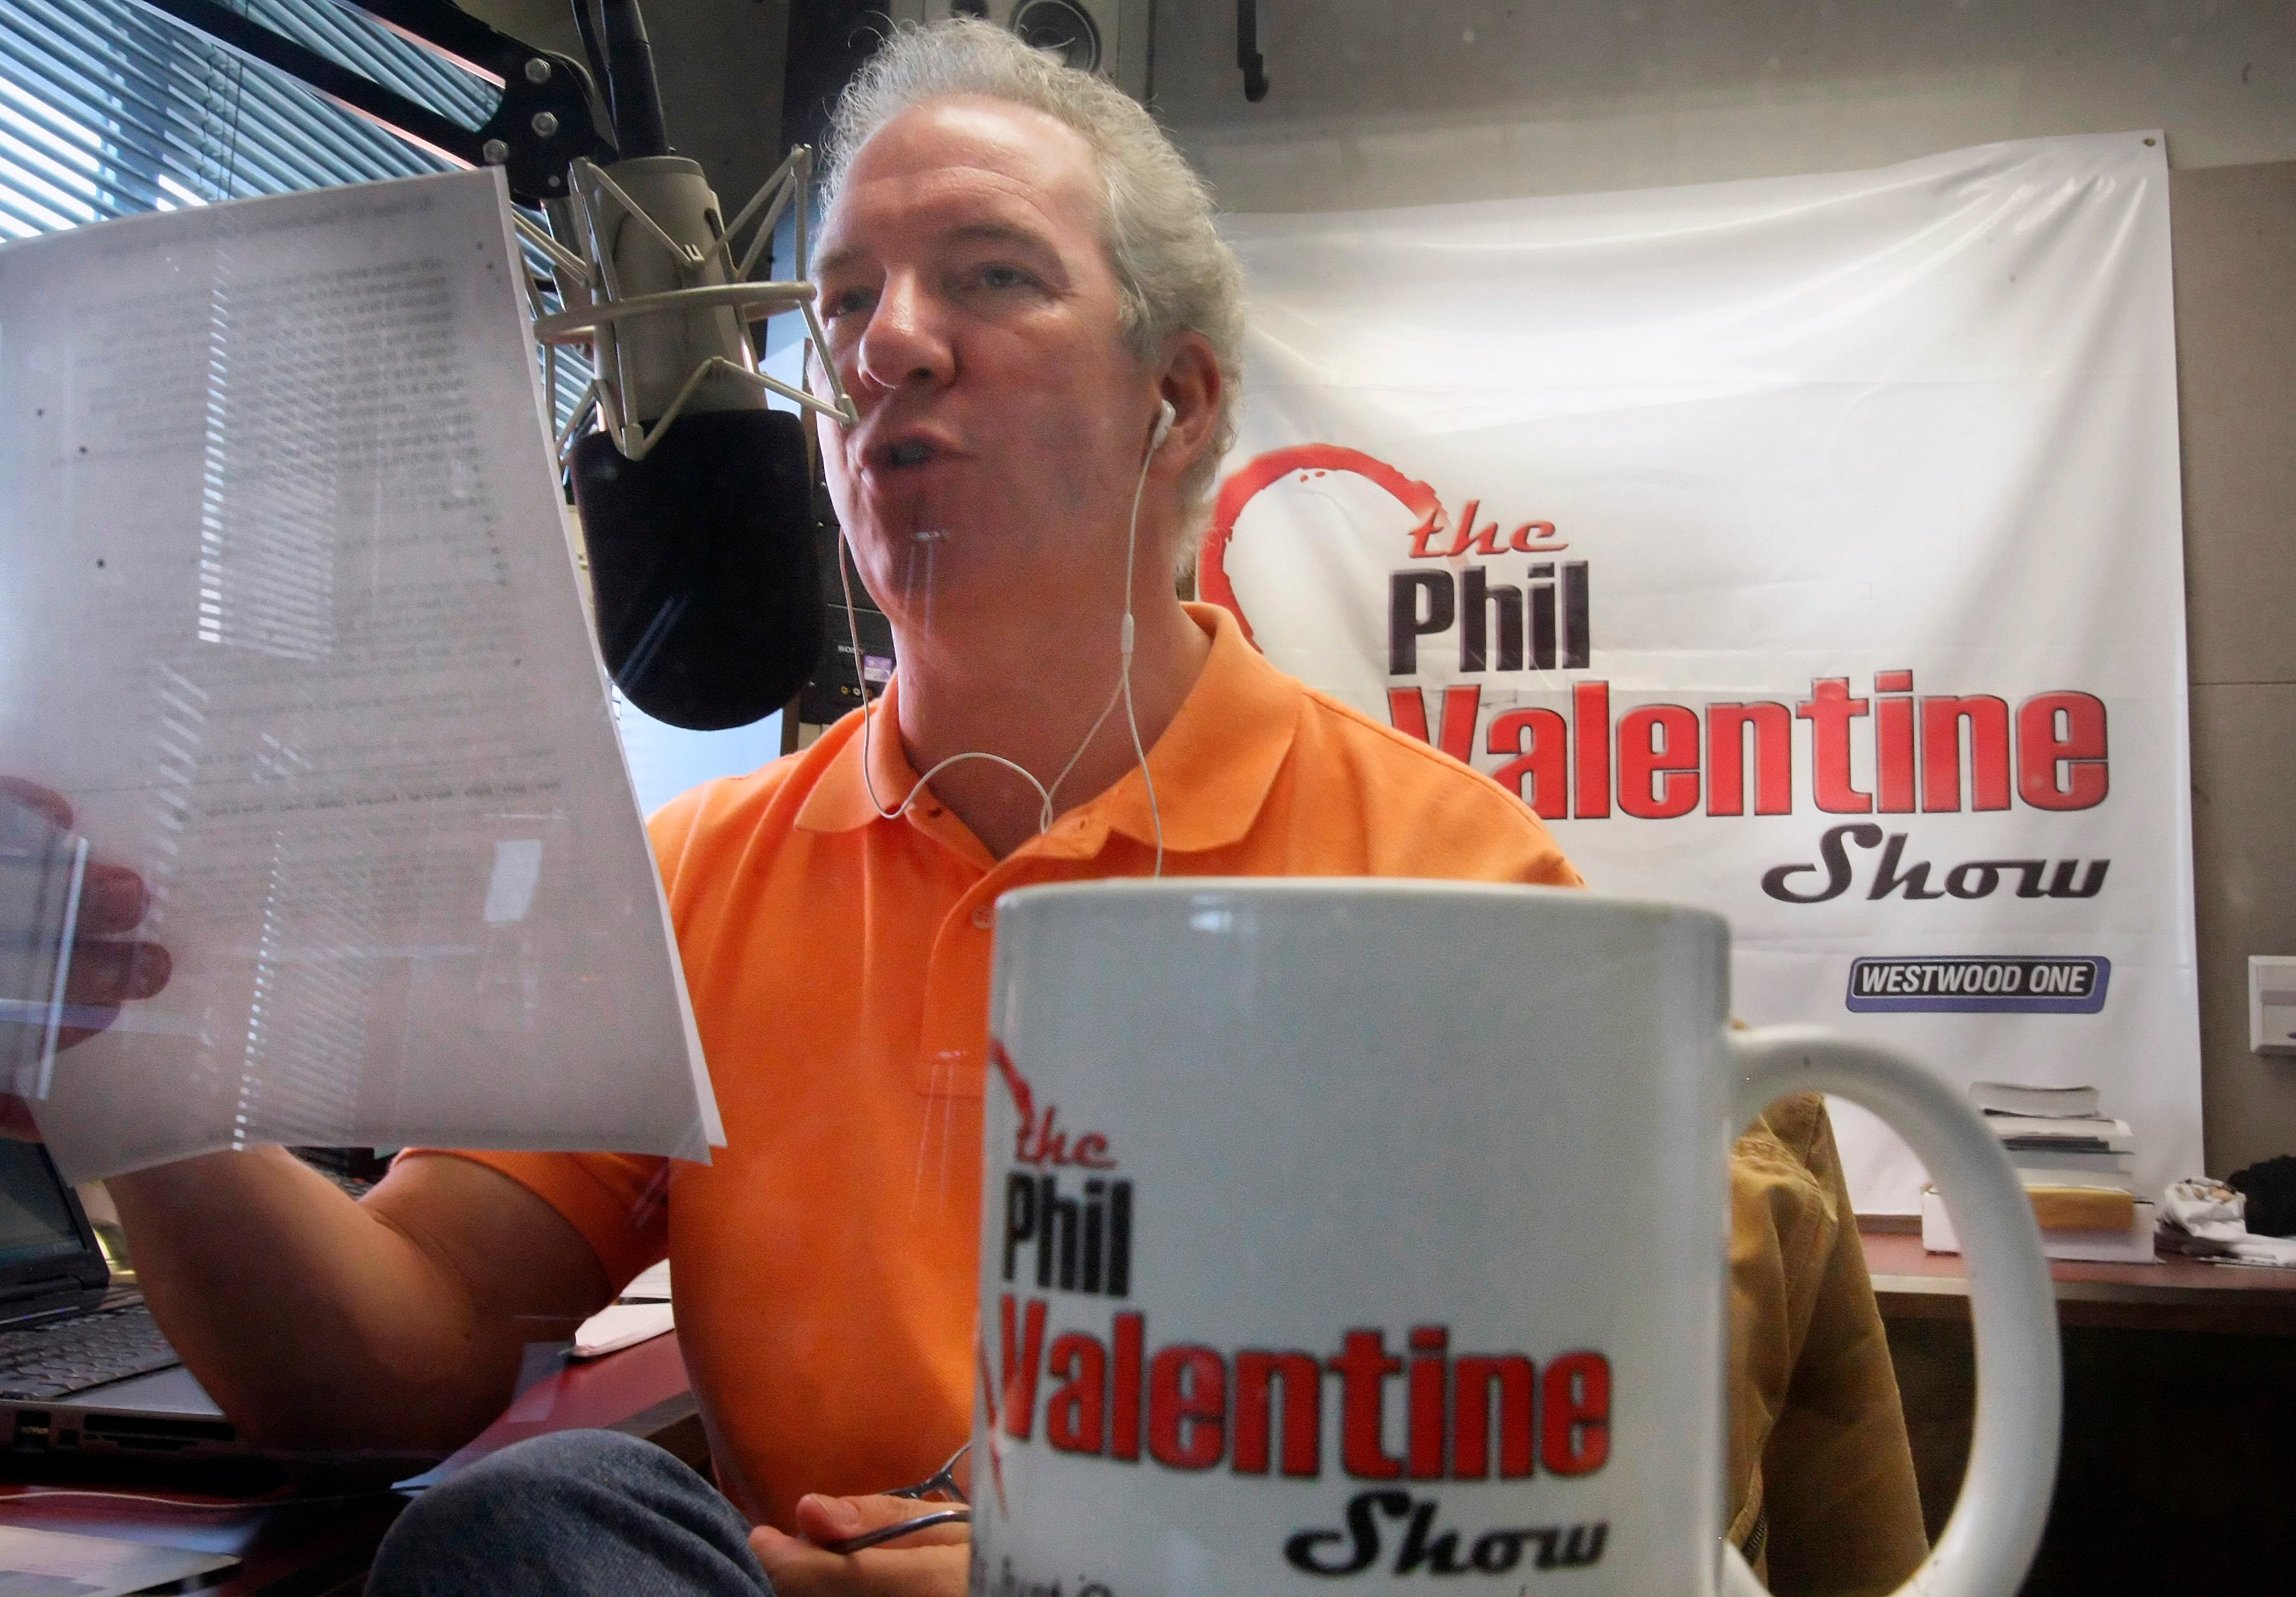 Conservative talk show host Phil Valentine